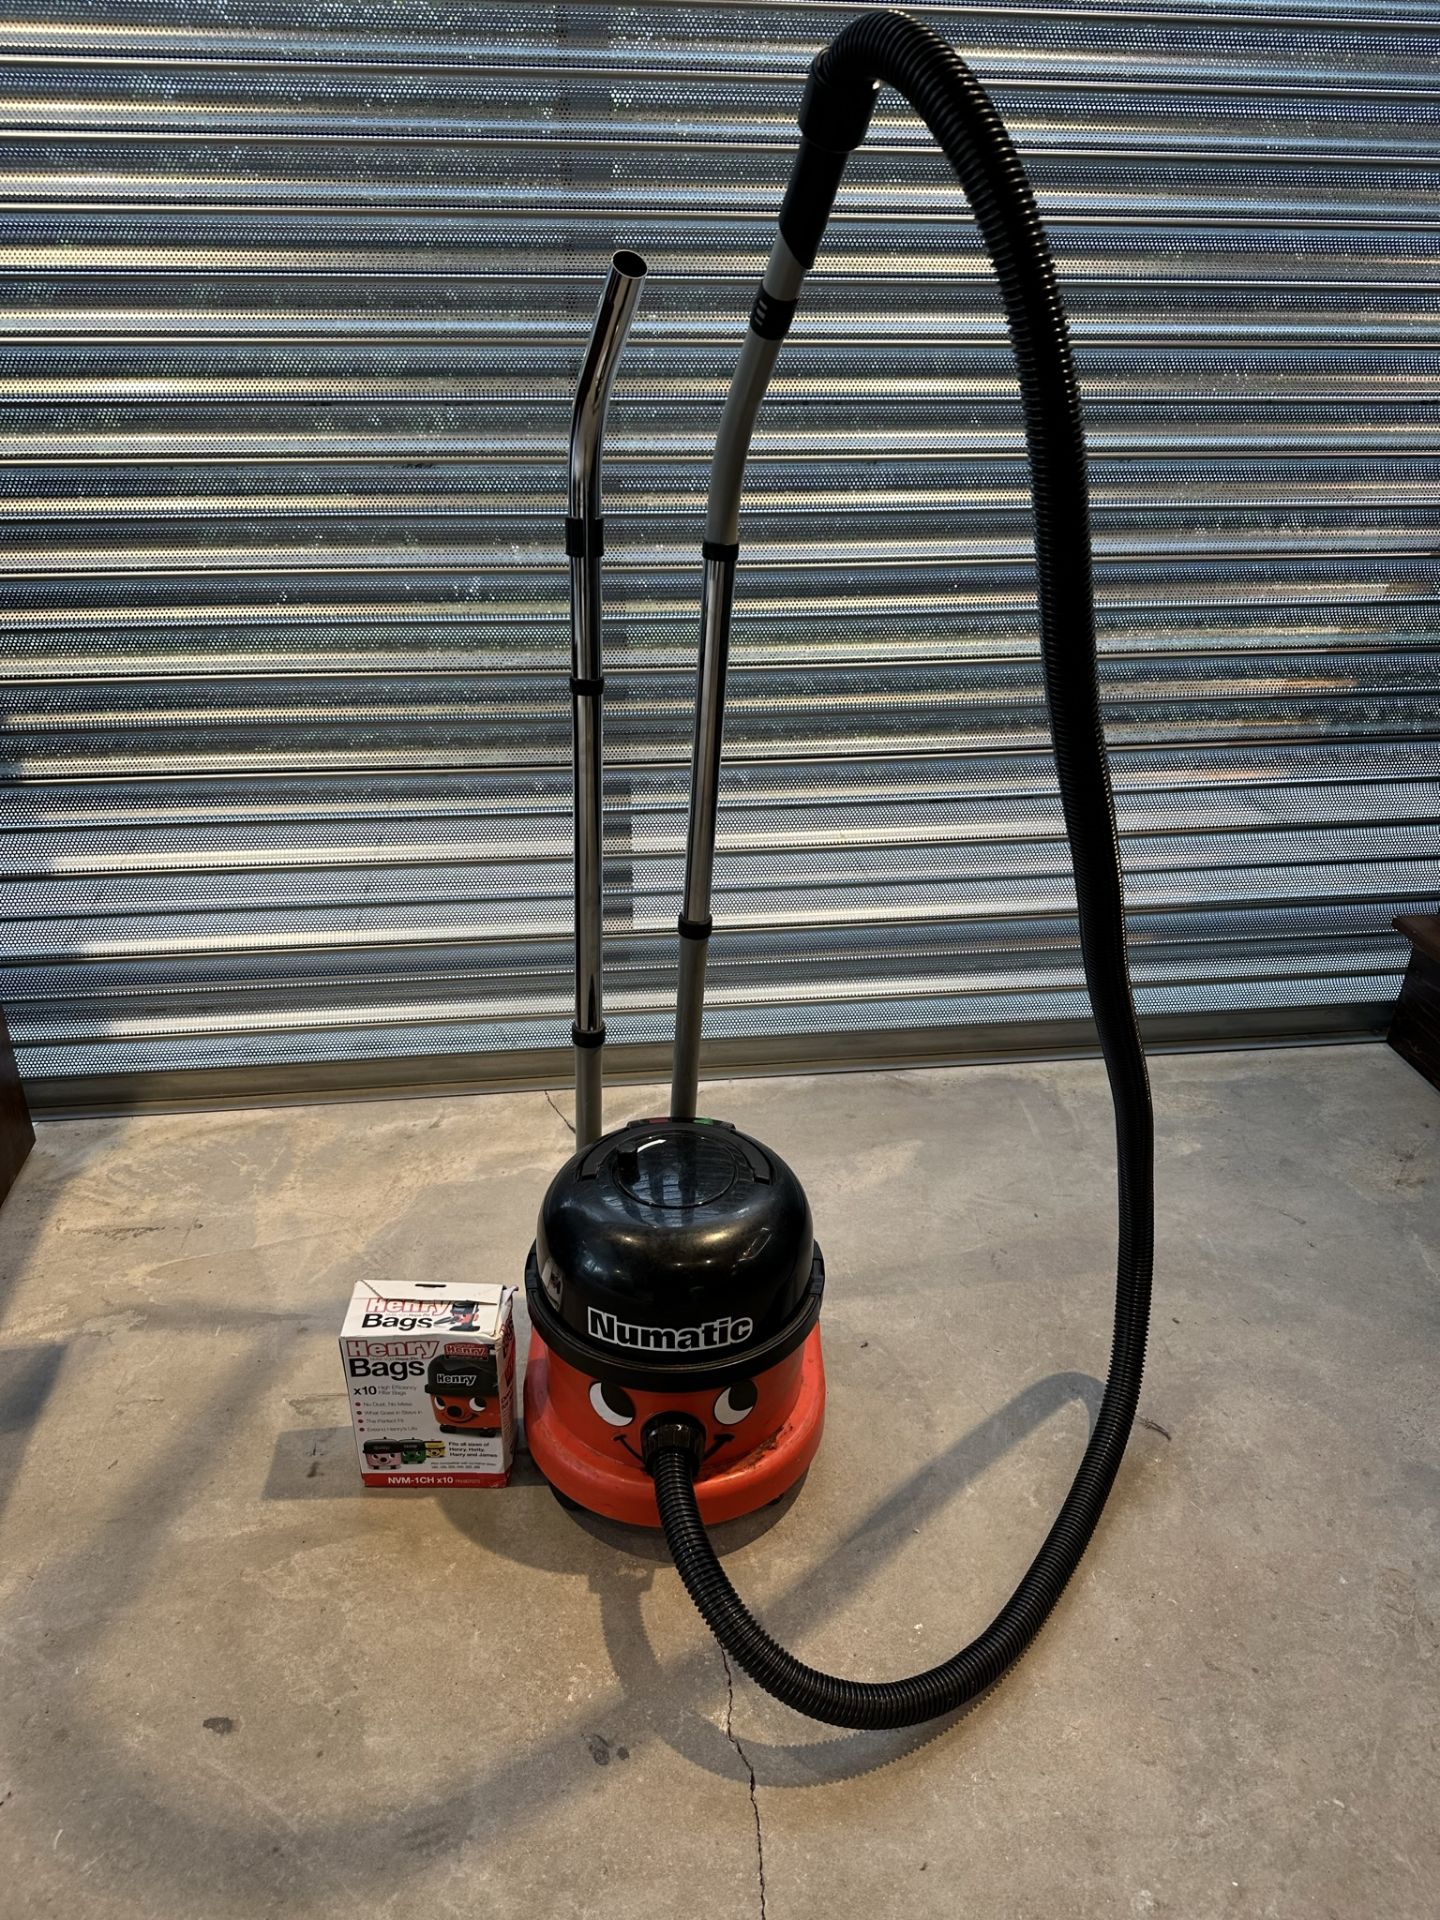 Numatic Nrv240-11 commercial vacuum cleaner